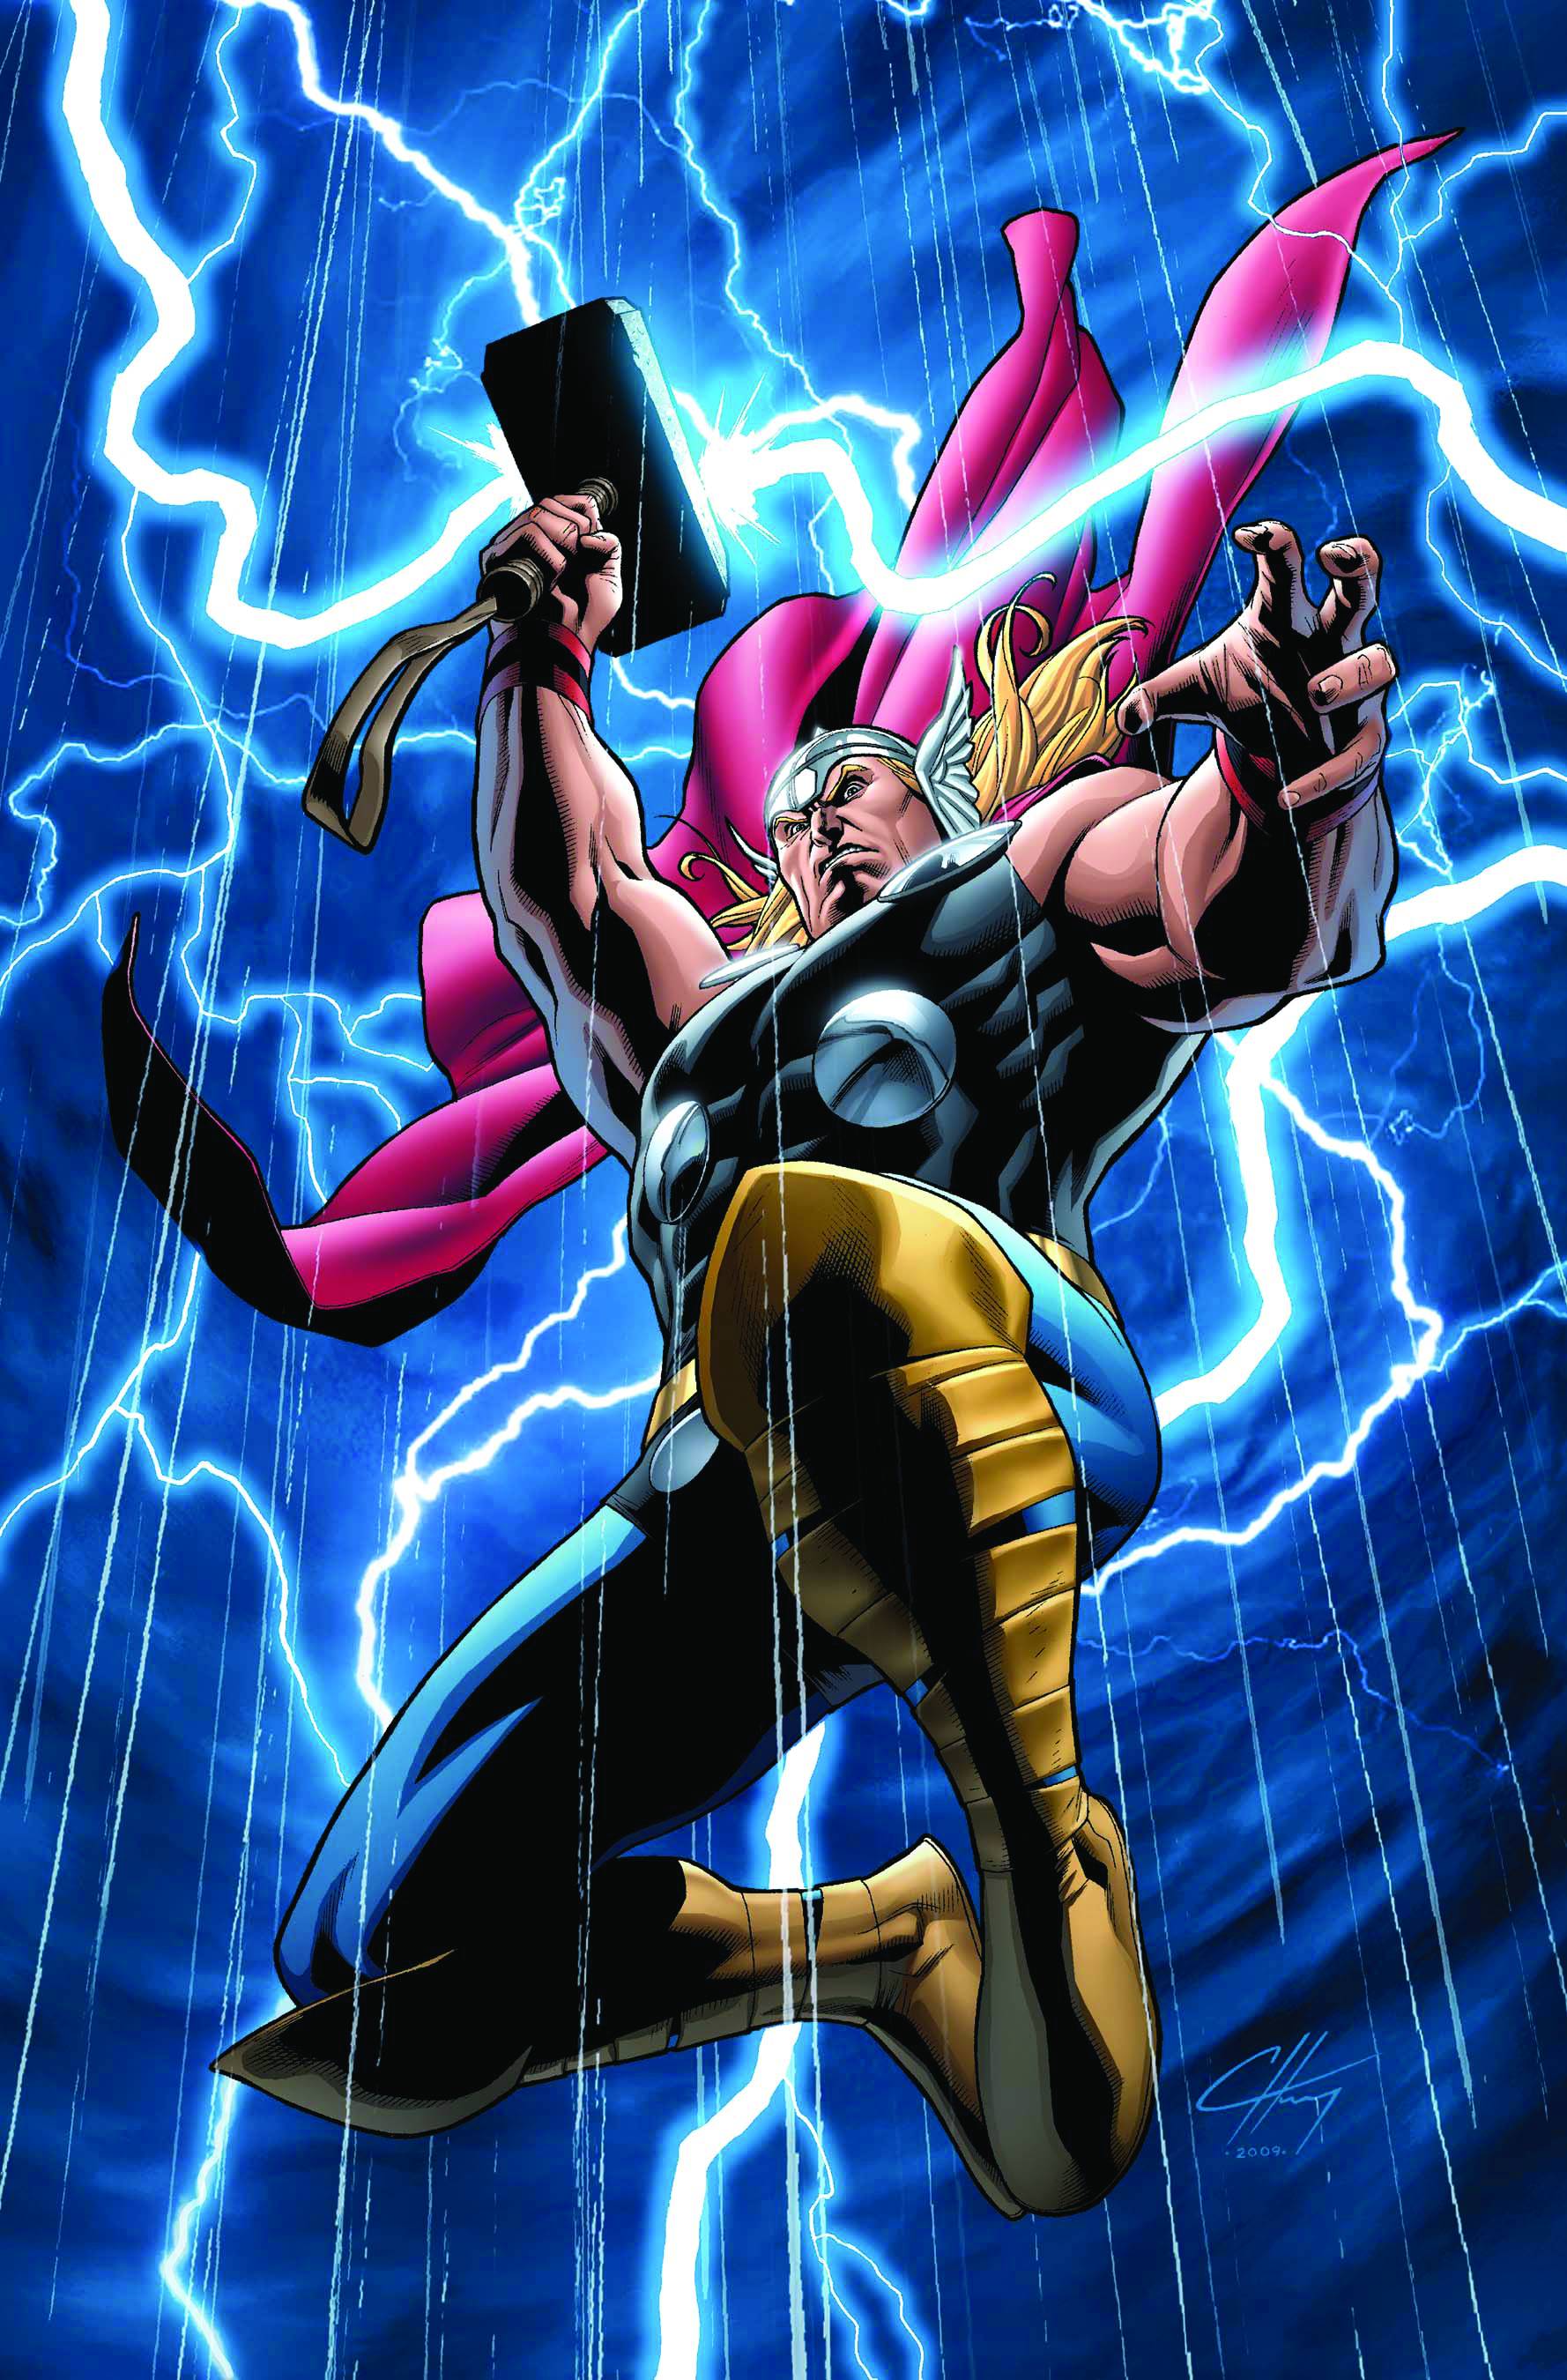 Marvel Adventures Super Heroes #2 (2010)